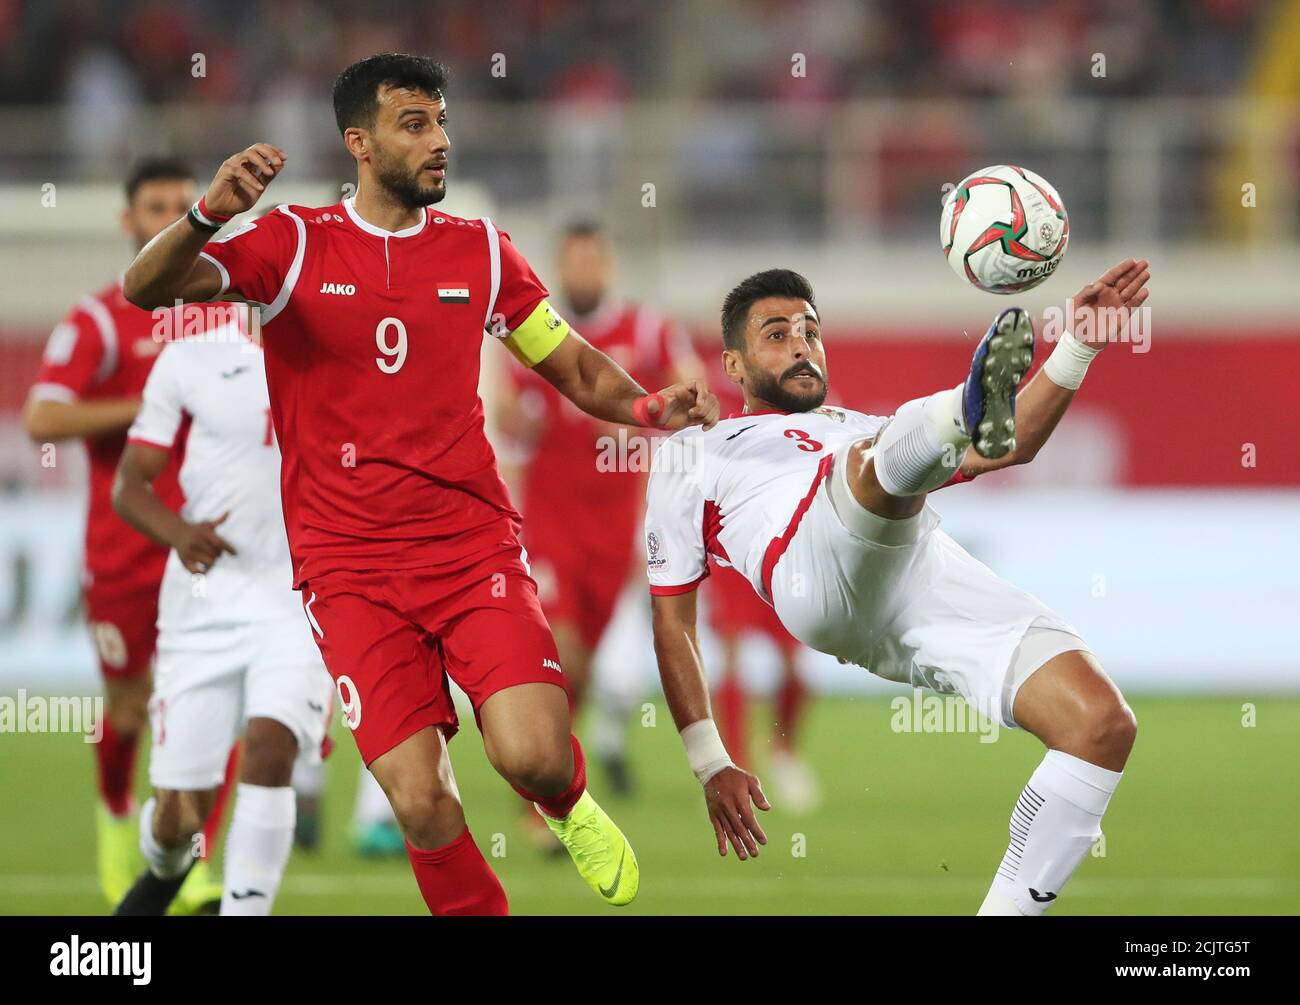 Soccer Football - AFC Asian Cup - Jordan v Syria - Group B - Sheikh Khalifa  International Stadium, Al Ain, United Arab Emirates - January 10, 2019  Syria's Omar Al Somah in